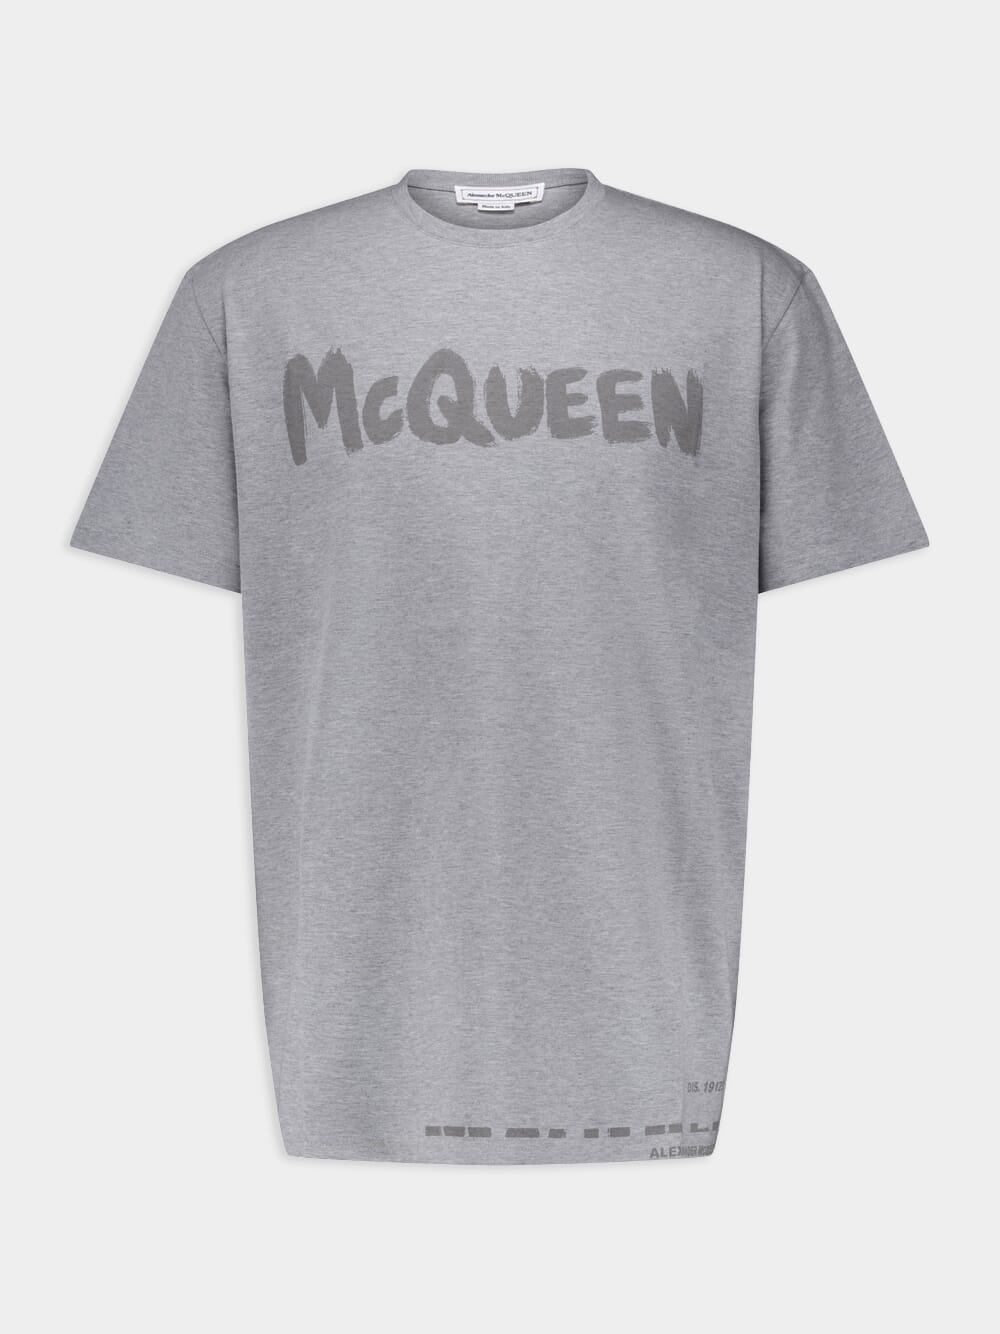 Alexander McQueenLogo-Print T-Shirt at Fashion Clinic